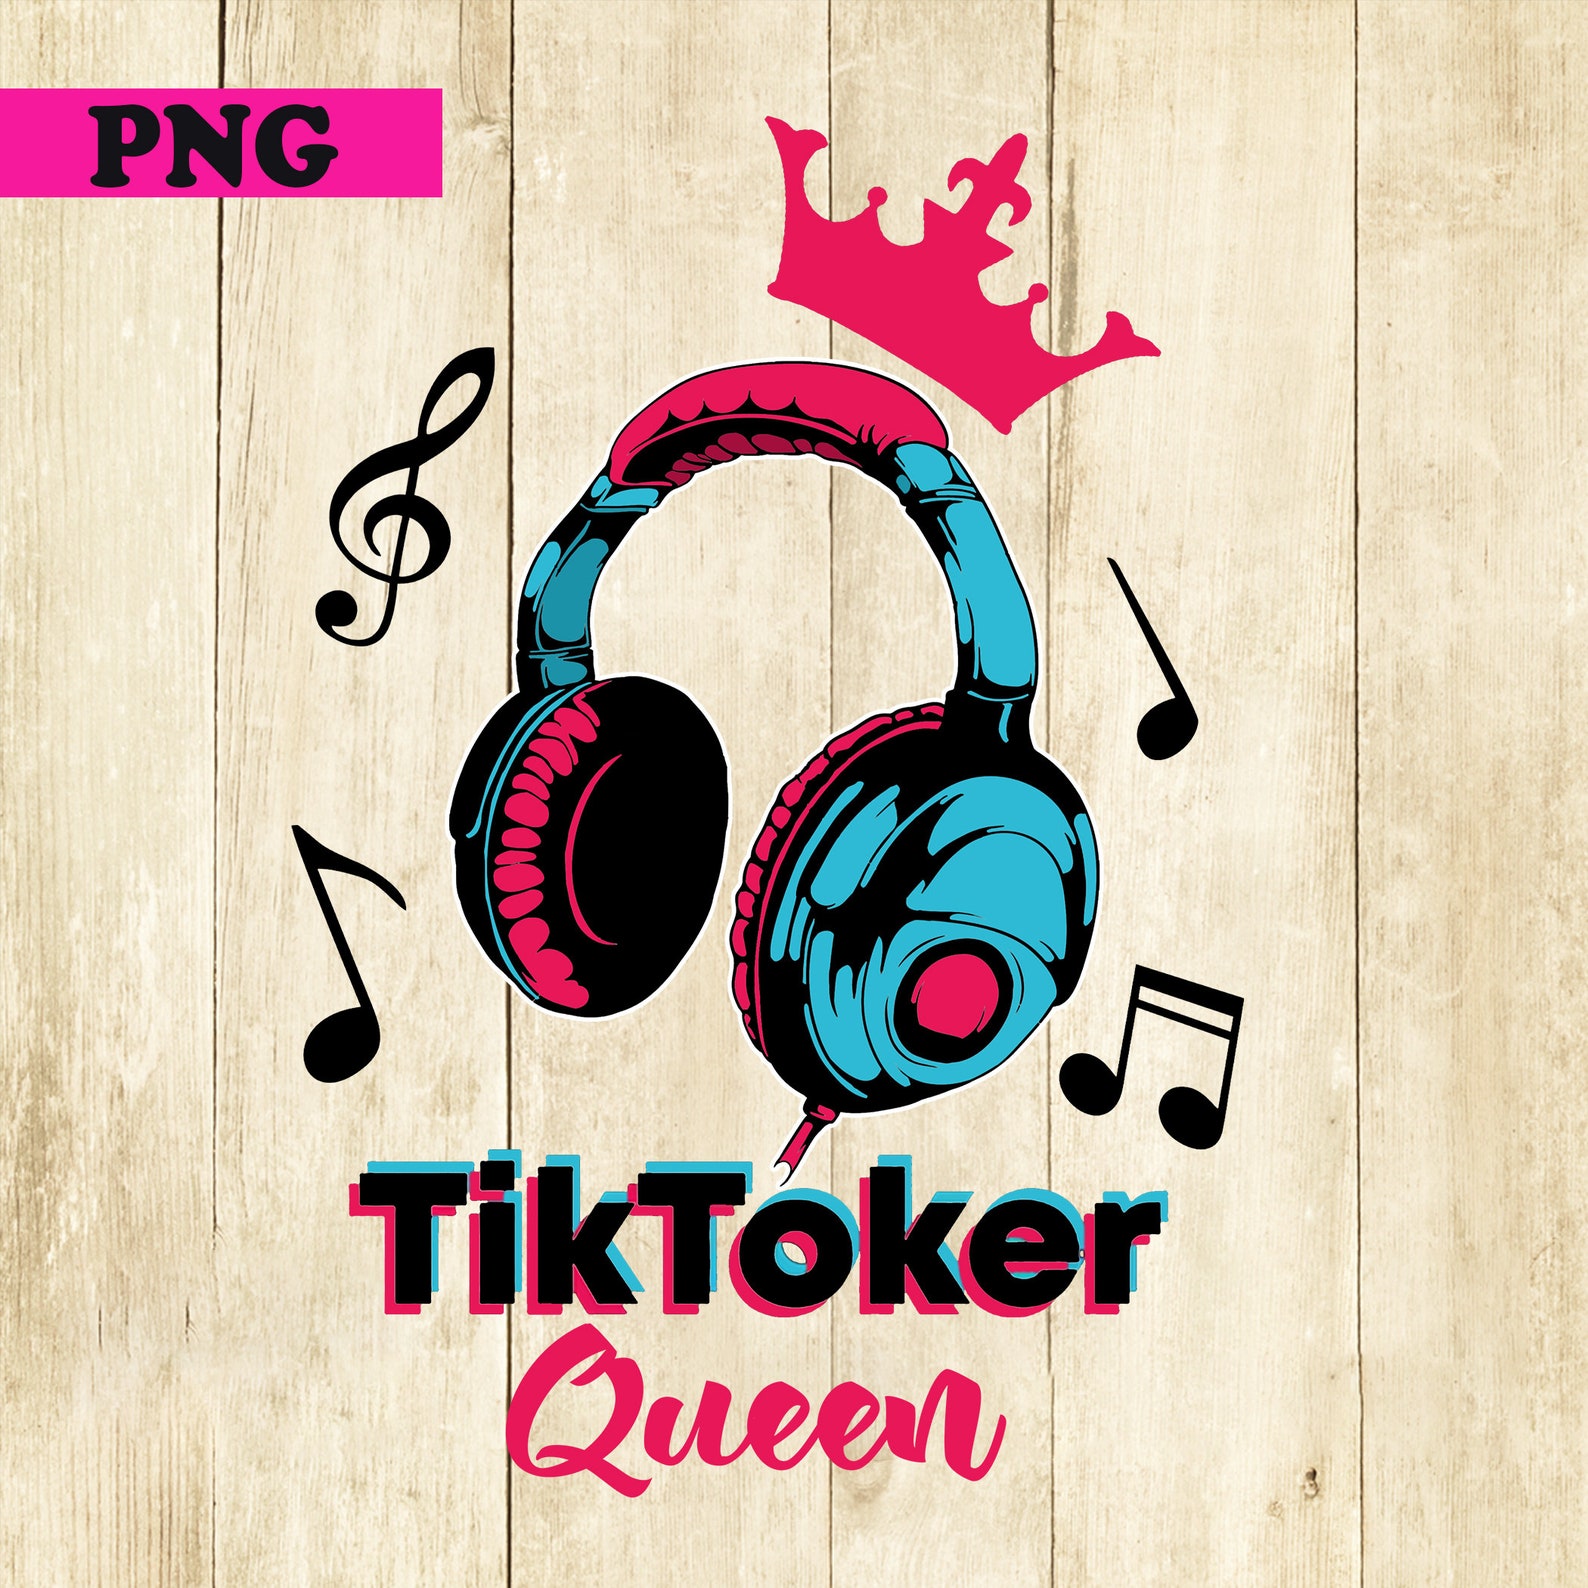 Tiktoker Princess Png Tik Tok Design Png Tik Tok Digital Etsy